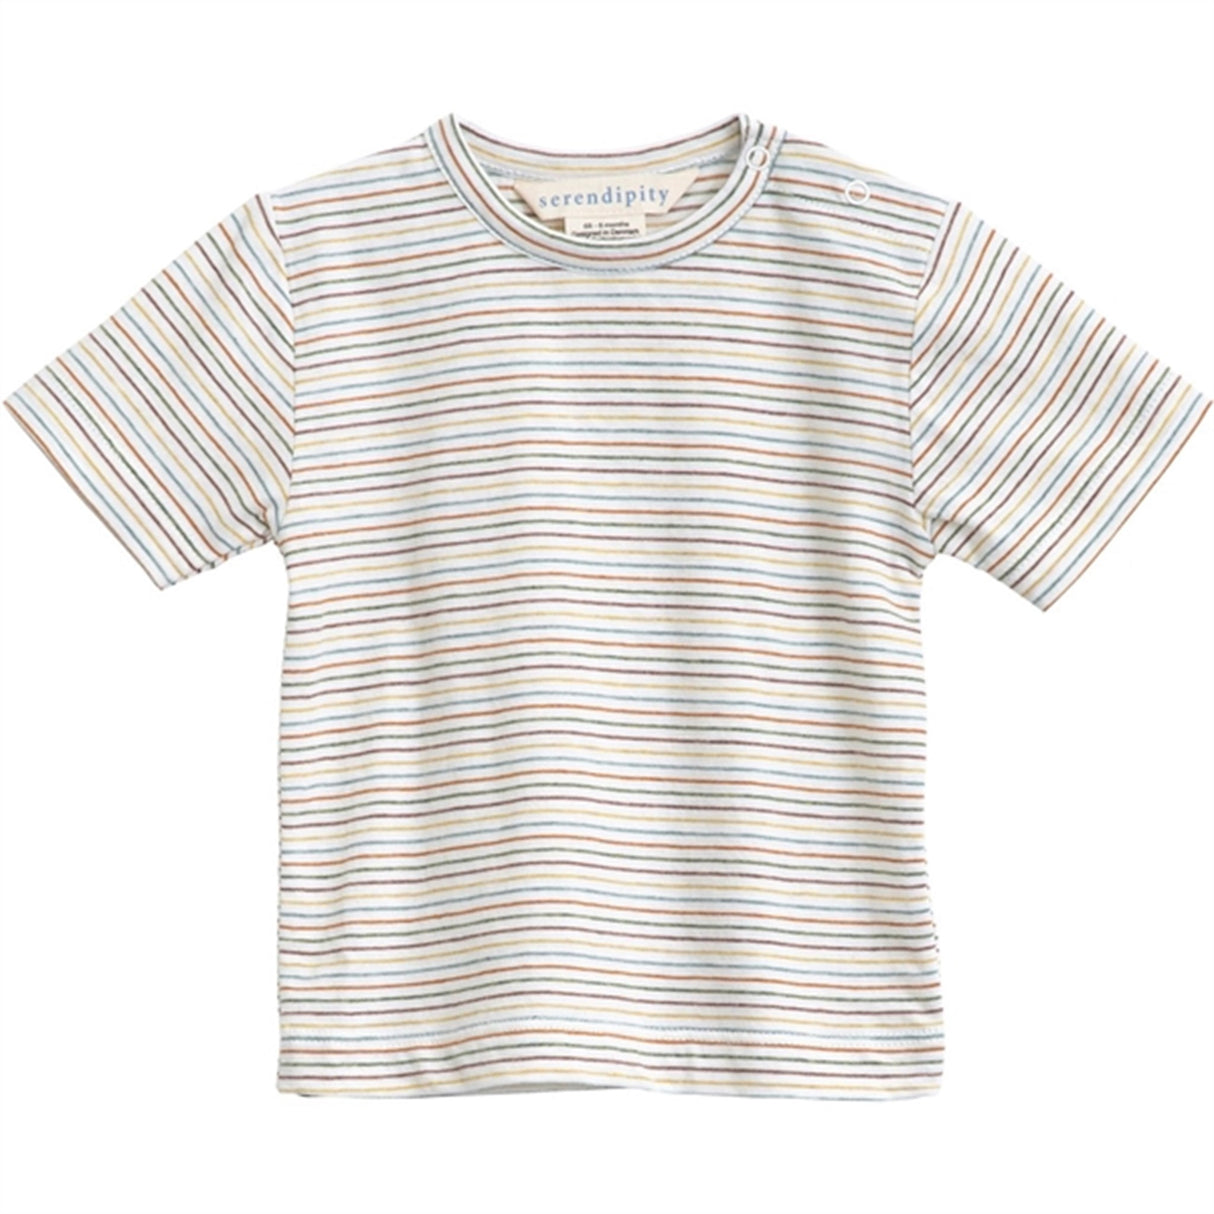 Serendipity Rainbow Stripe Bebis Jersey T-shirt